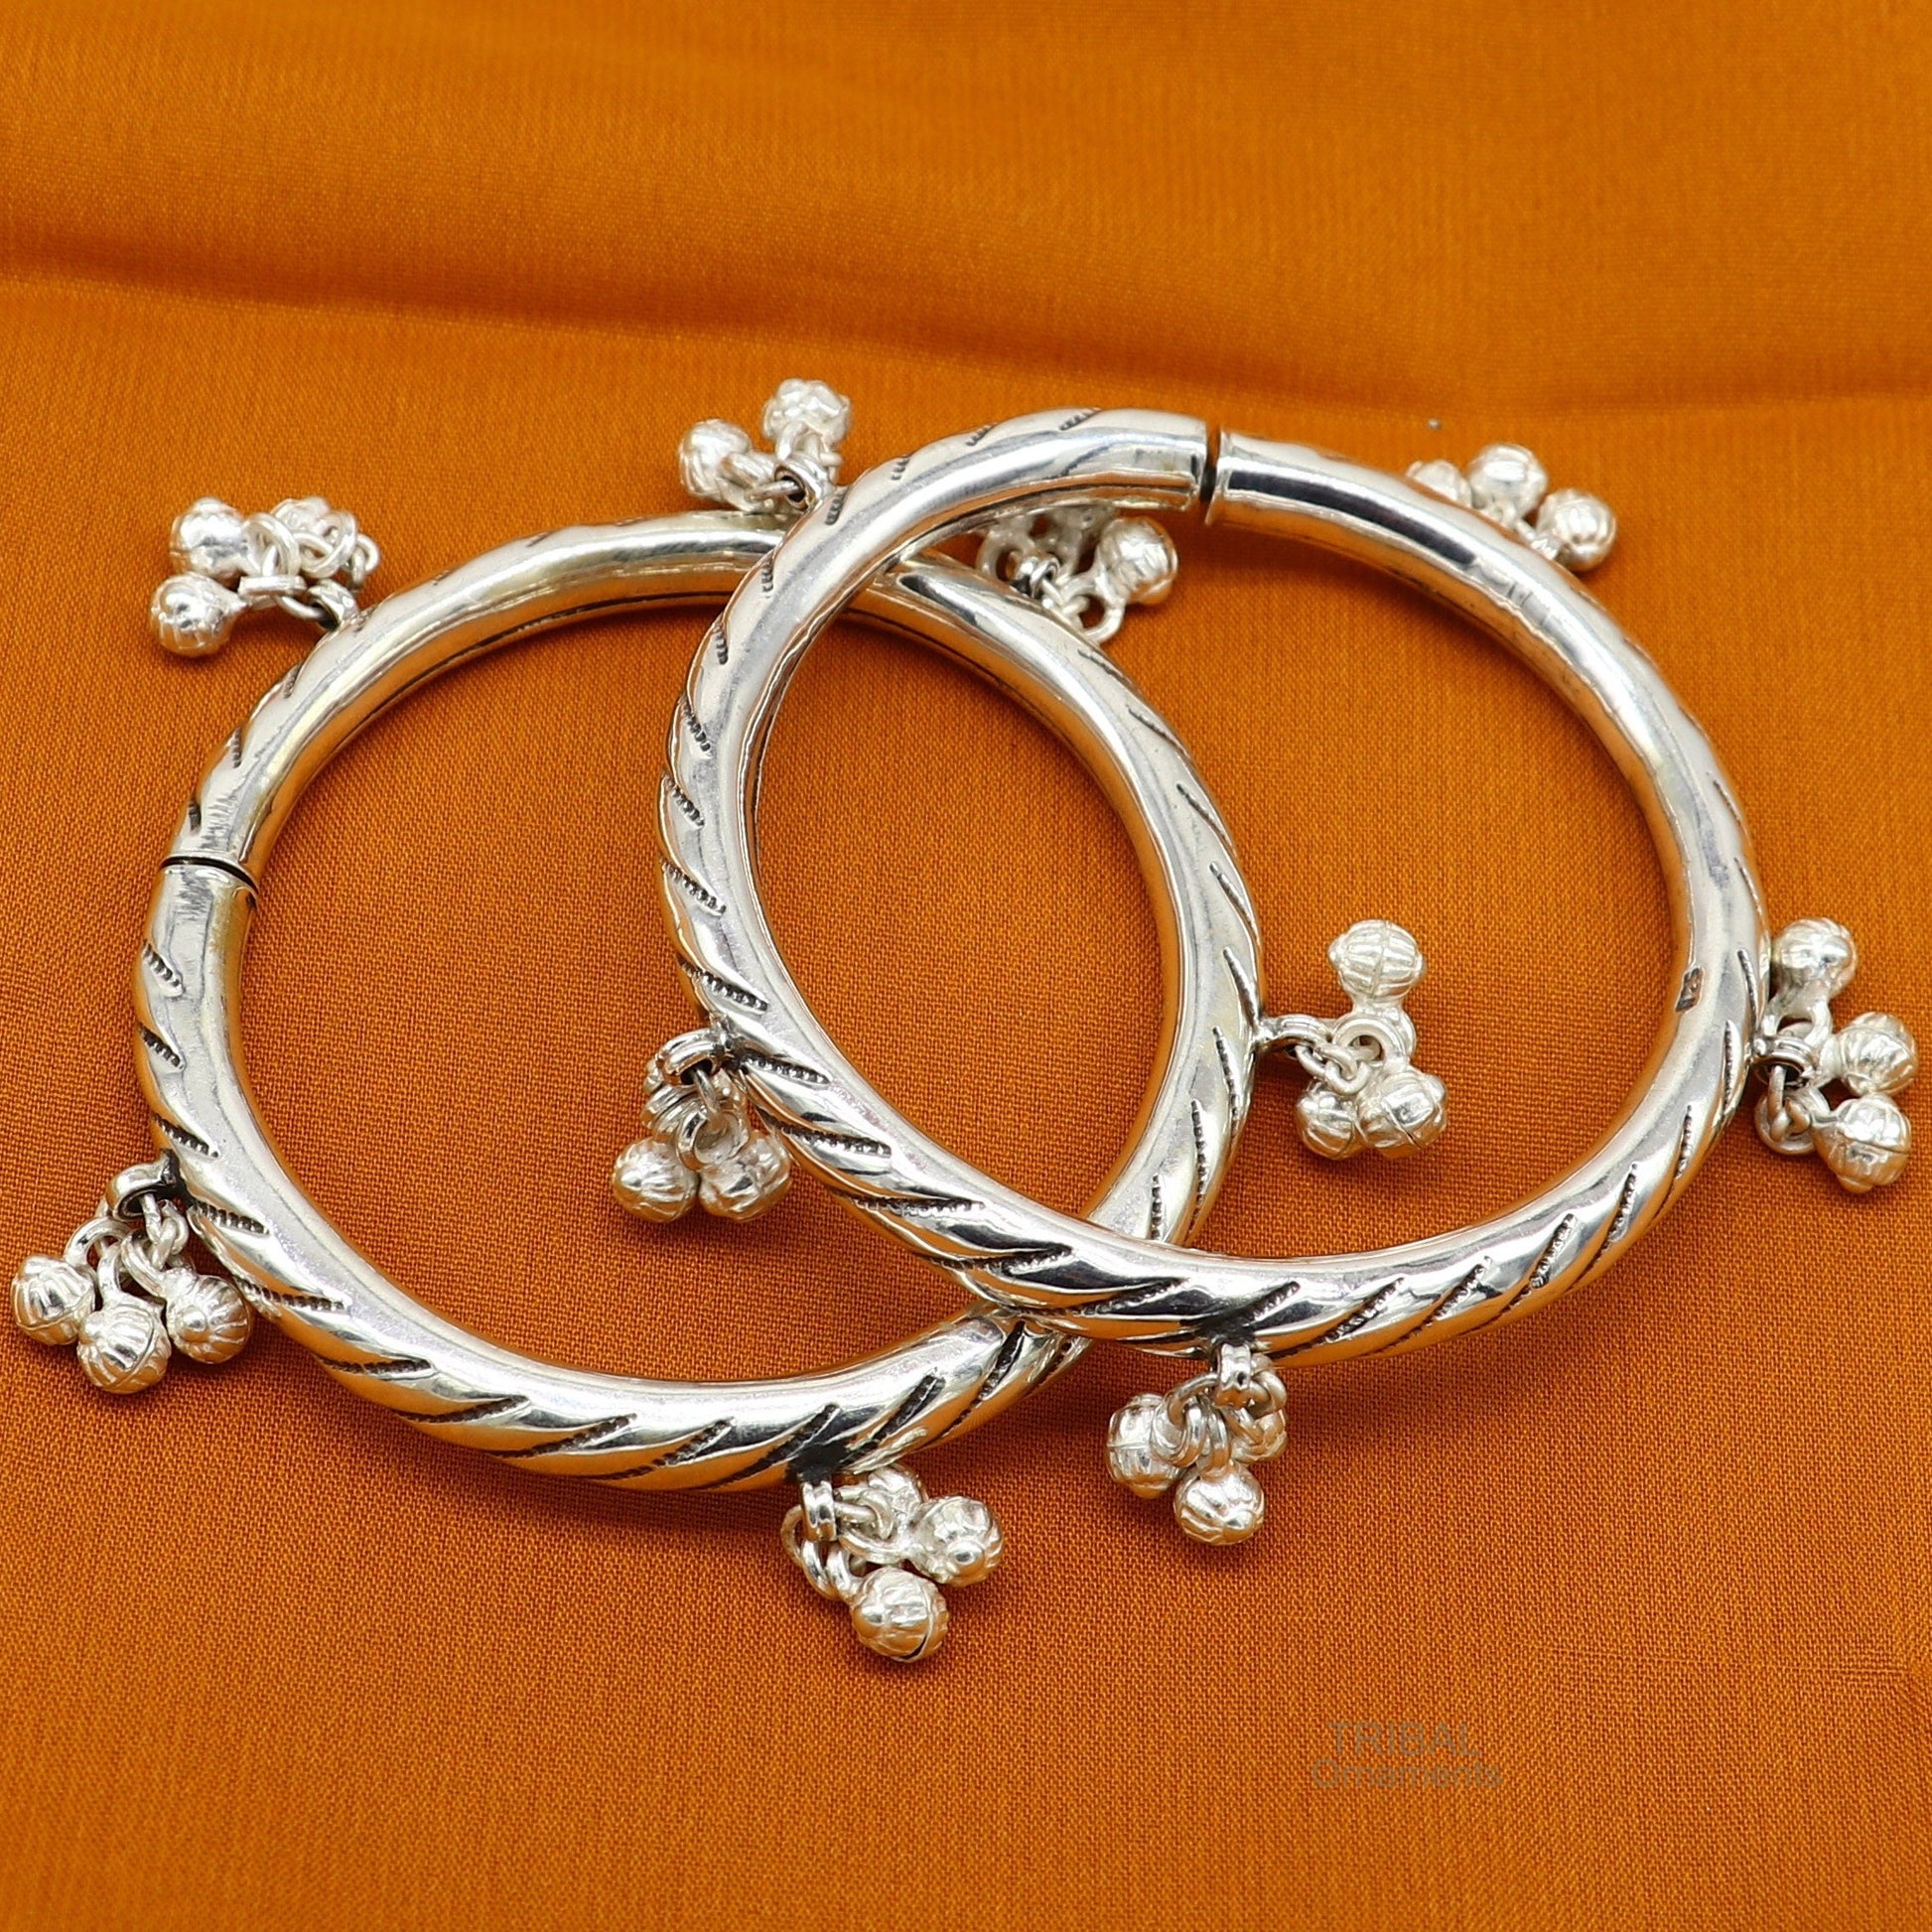 925 sterling silver handmade amazing jingling bells traditional indian kada bangle bracelet jewelry, stylish brides ethnic jewelry  ba138 - TRIBAL ORNAMENTS